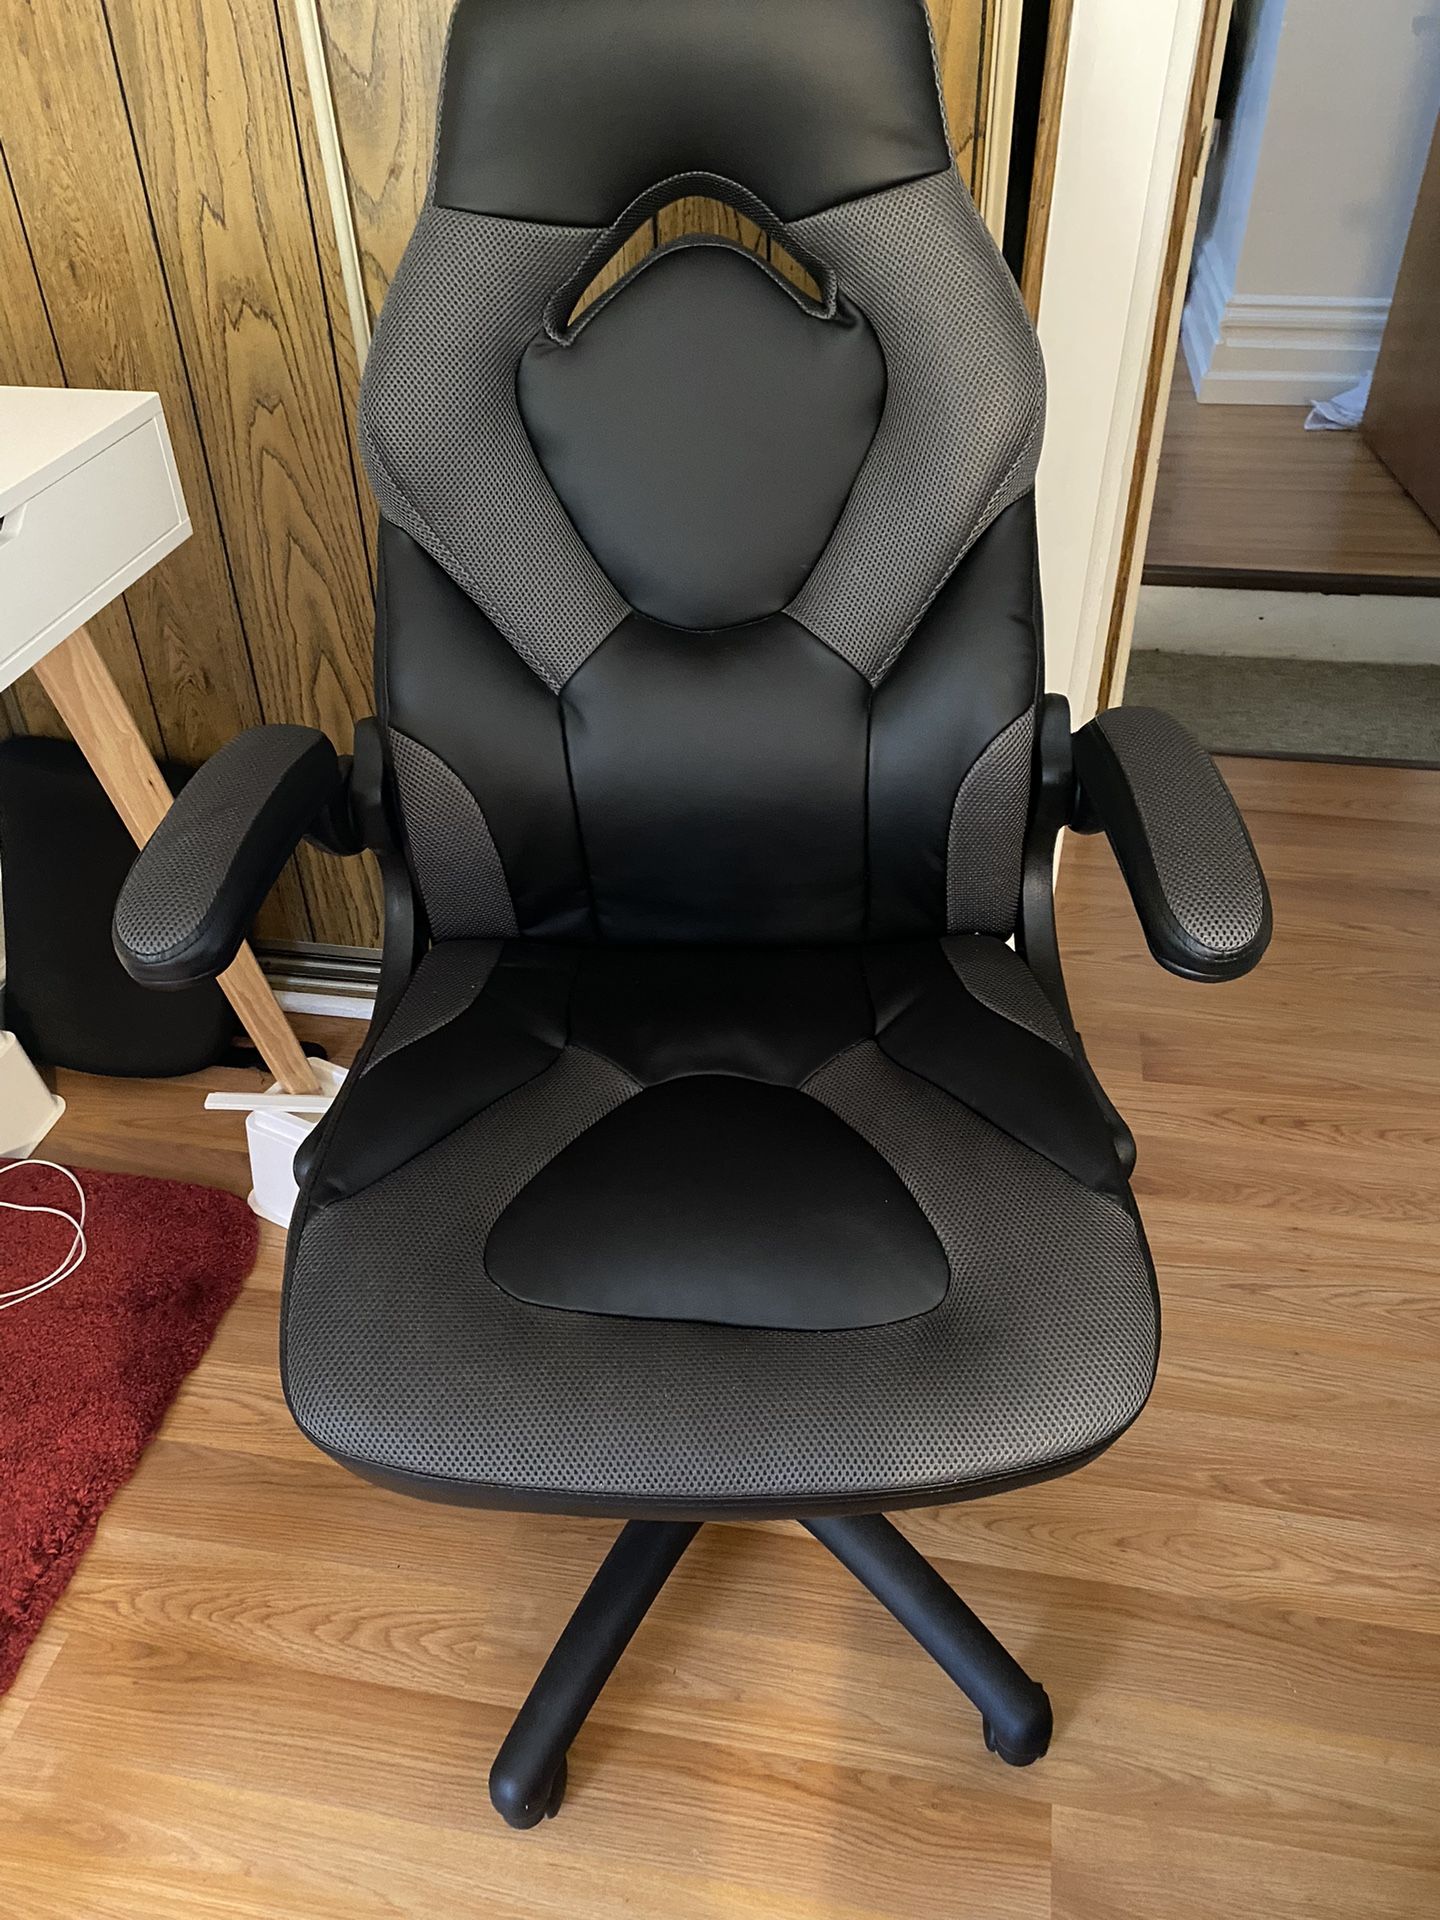 Game/desk chair